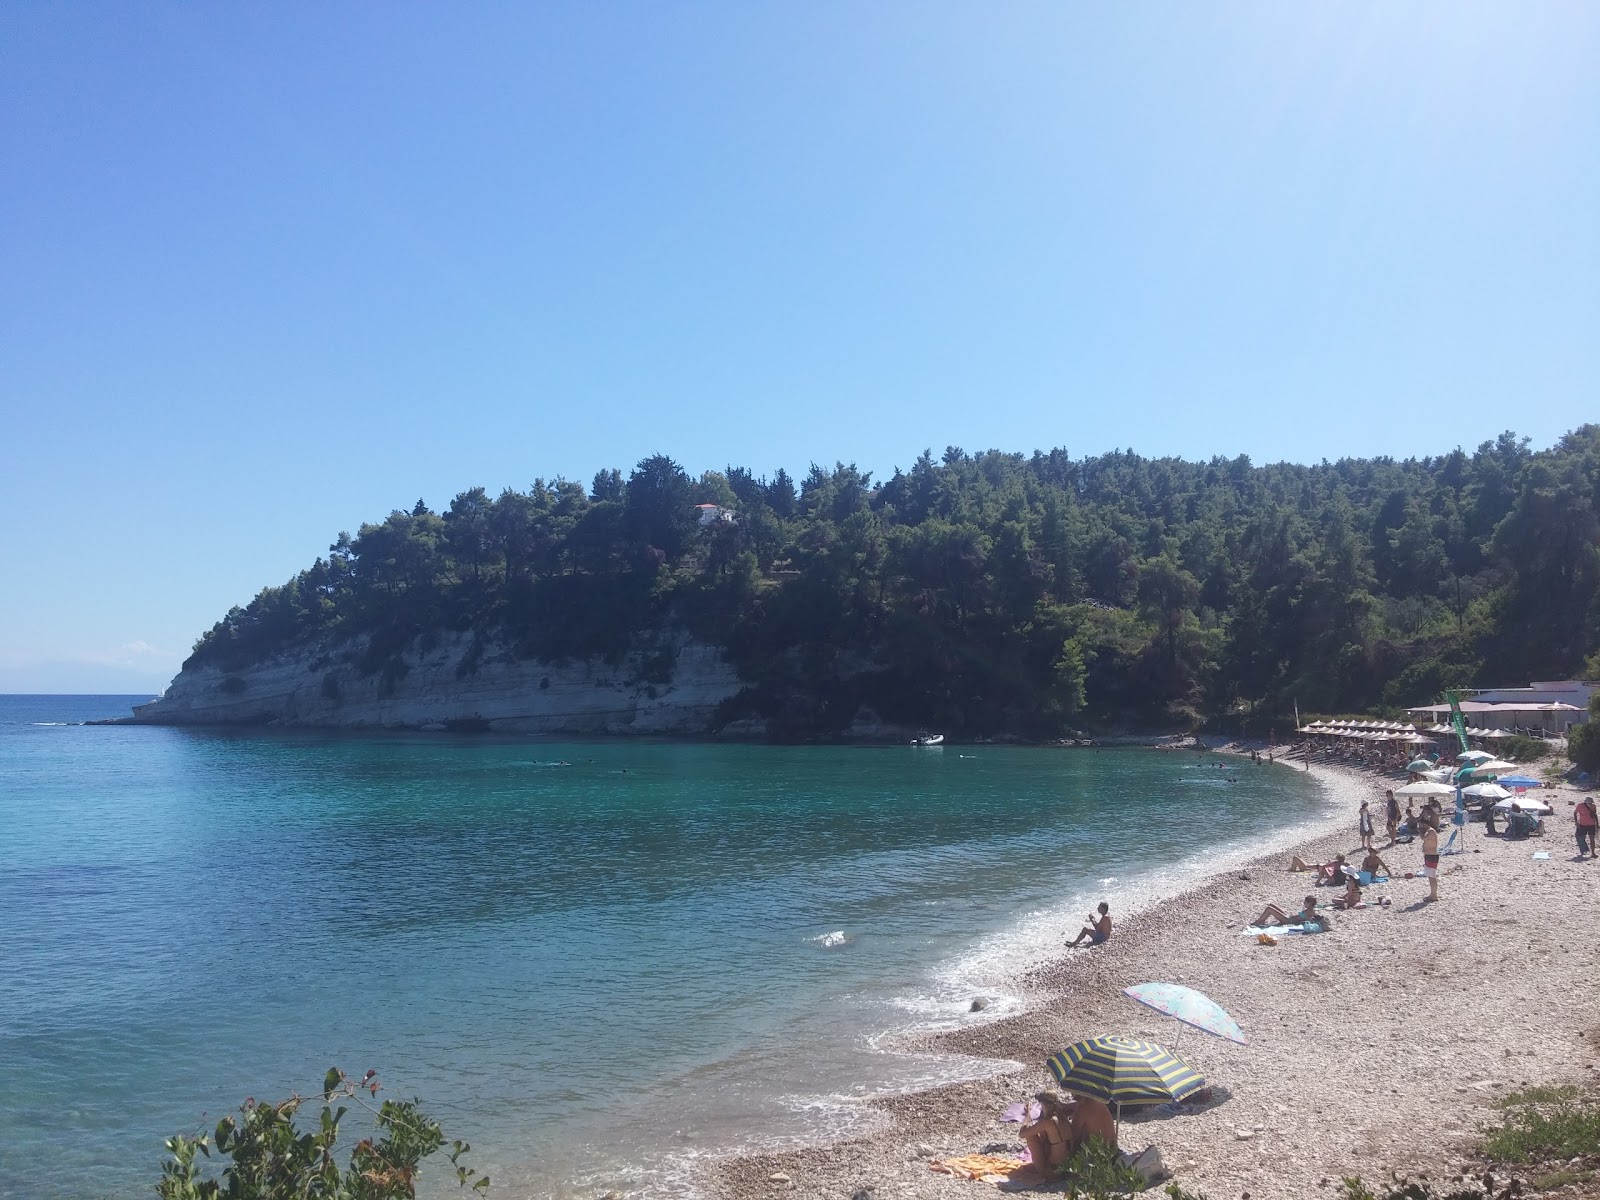 Foto di Milia beach ubicato in zona naturale